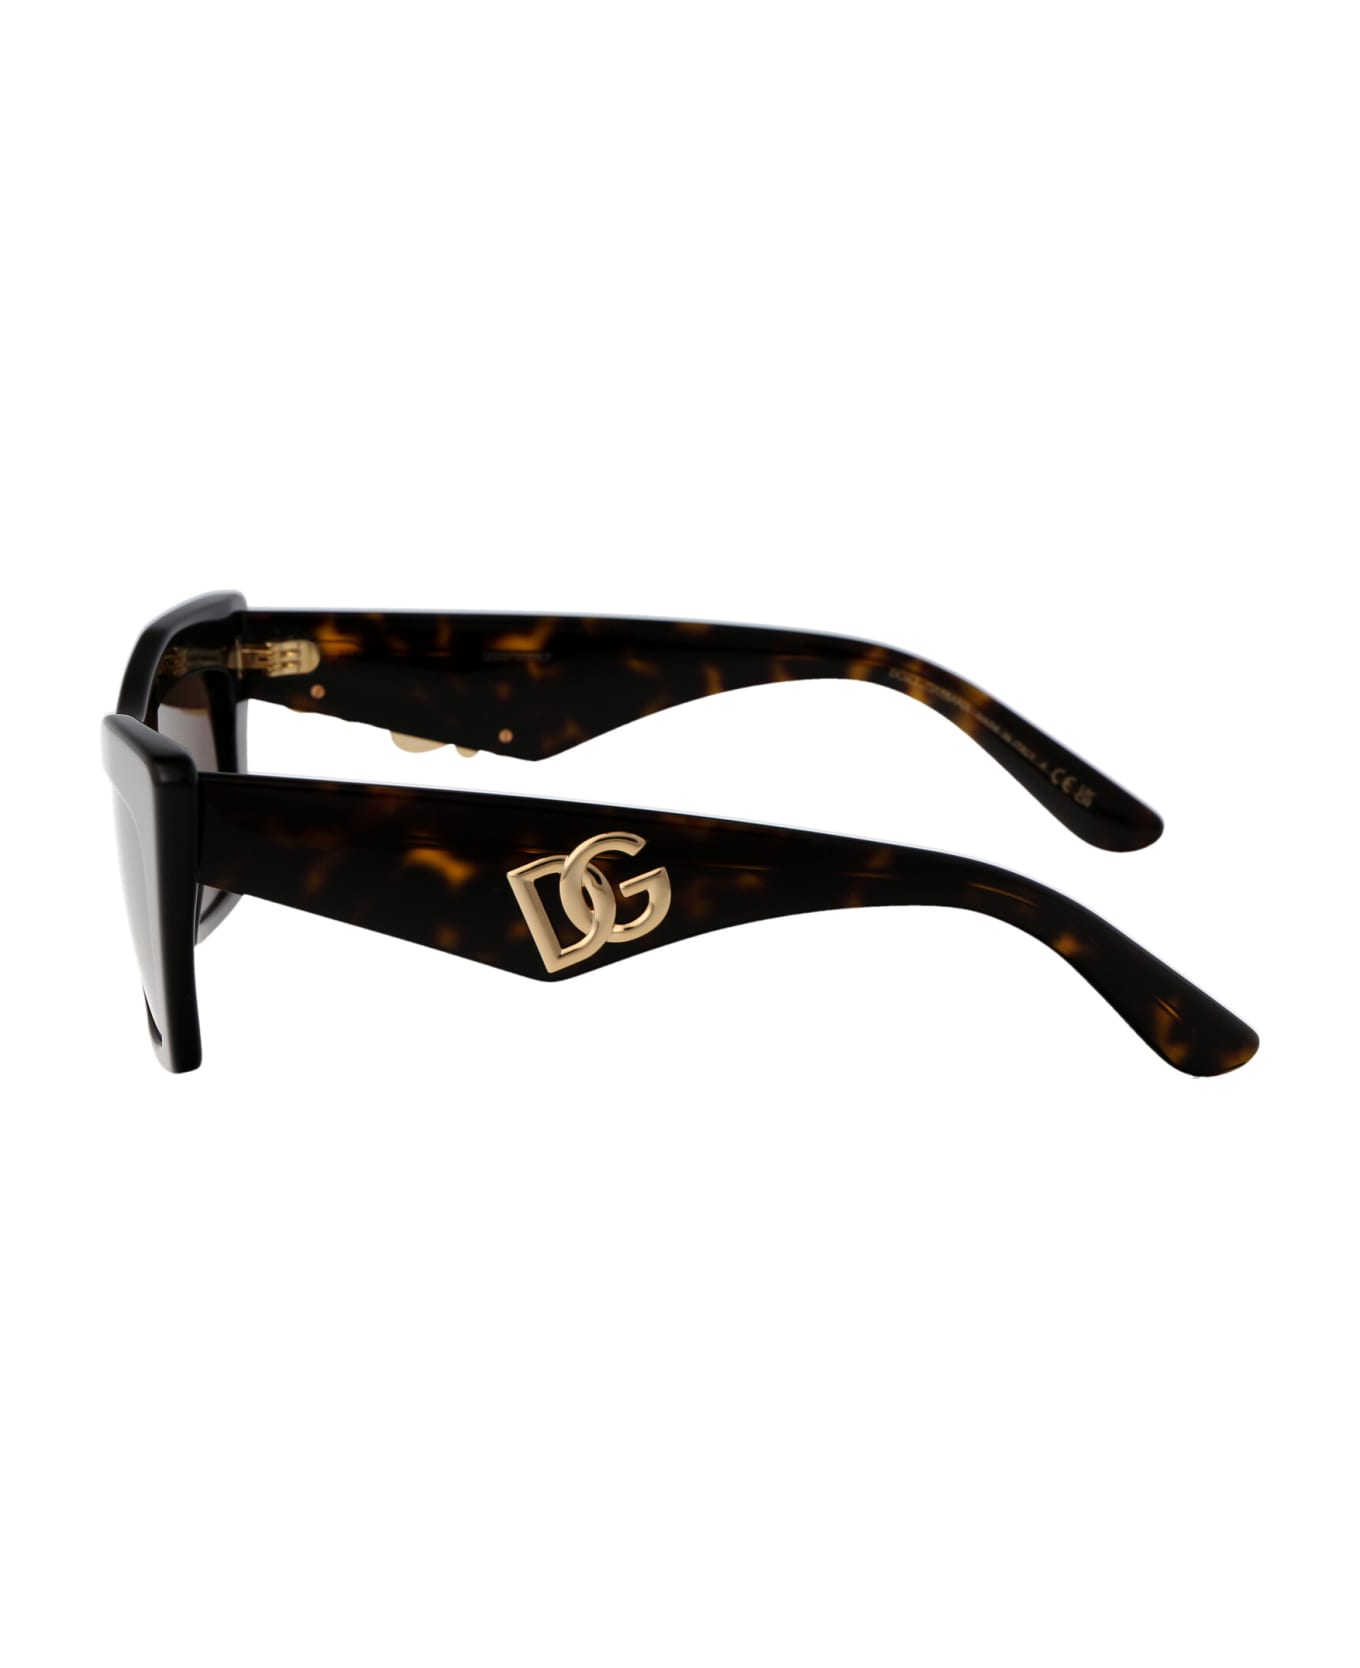 Eltin Nexum Sunglasses Eyewear 0dg4435 Sunglasses - 502/73 HAVANA